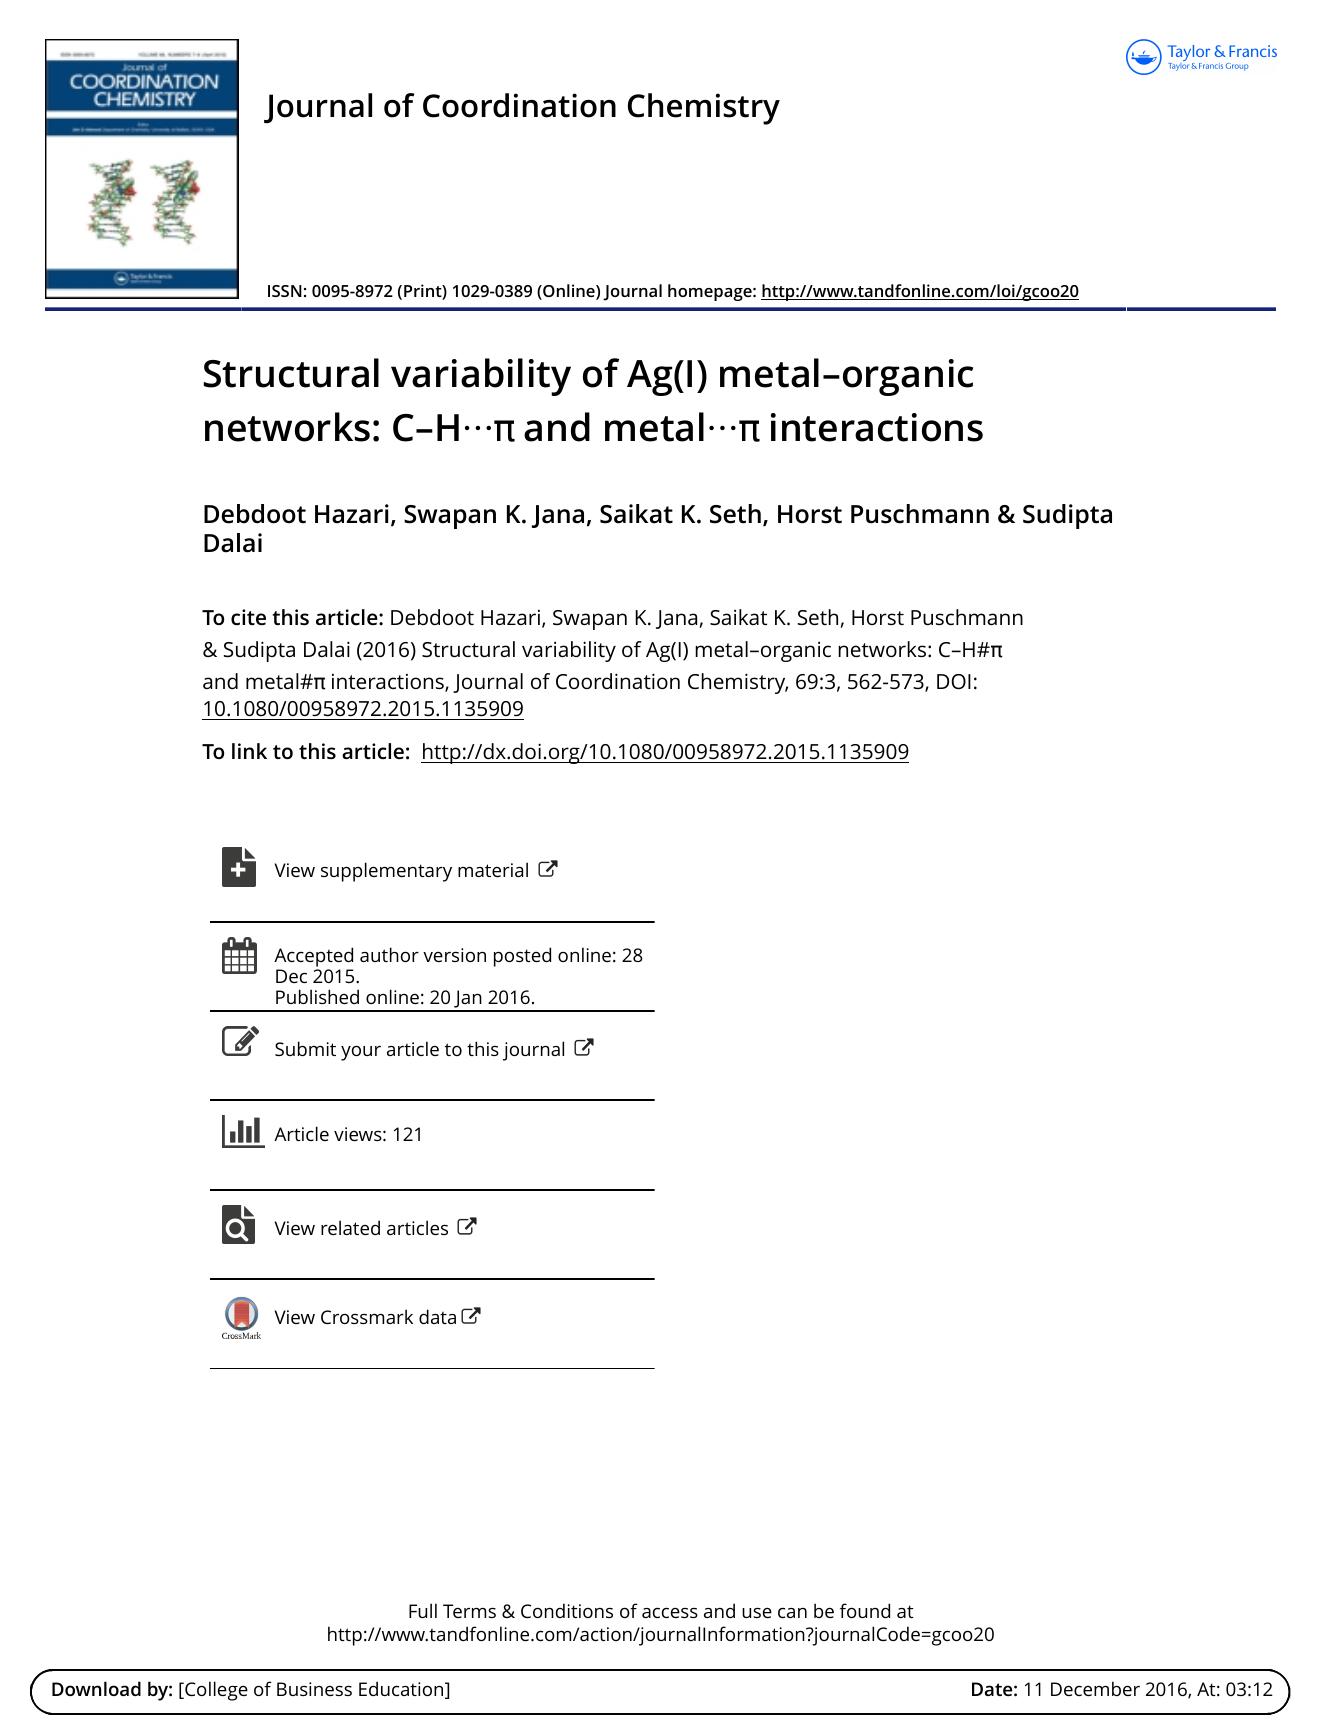 Structural variability of Ag(I) metalâorganic networks: CâHâ¯Ï and metalâ¯Ï interactions by Debdoot Hazari & Swapan K. Jana & Saikat K. Seth & Horst Puschmann & Sudipta Dalai